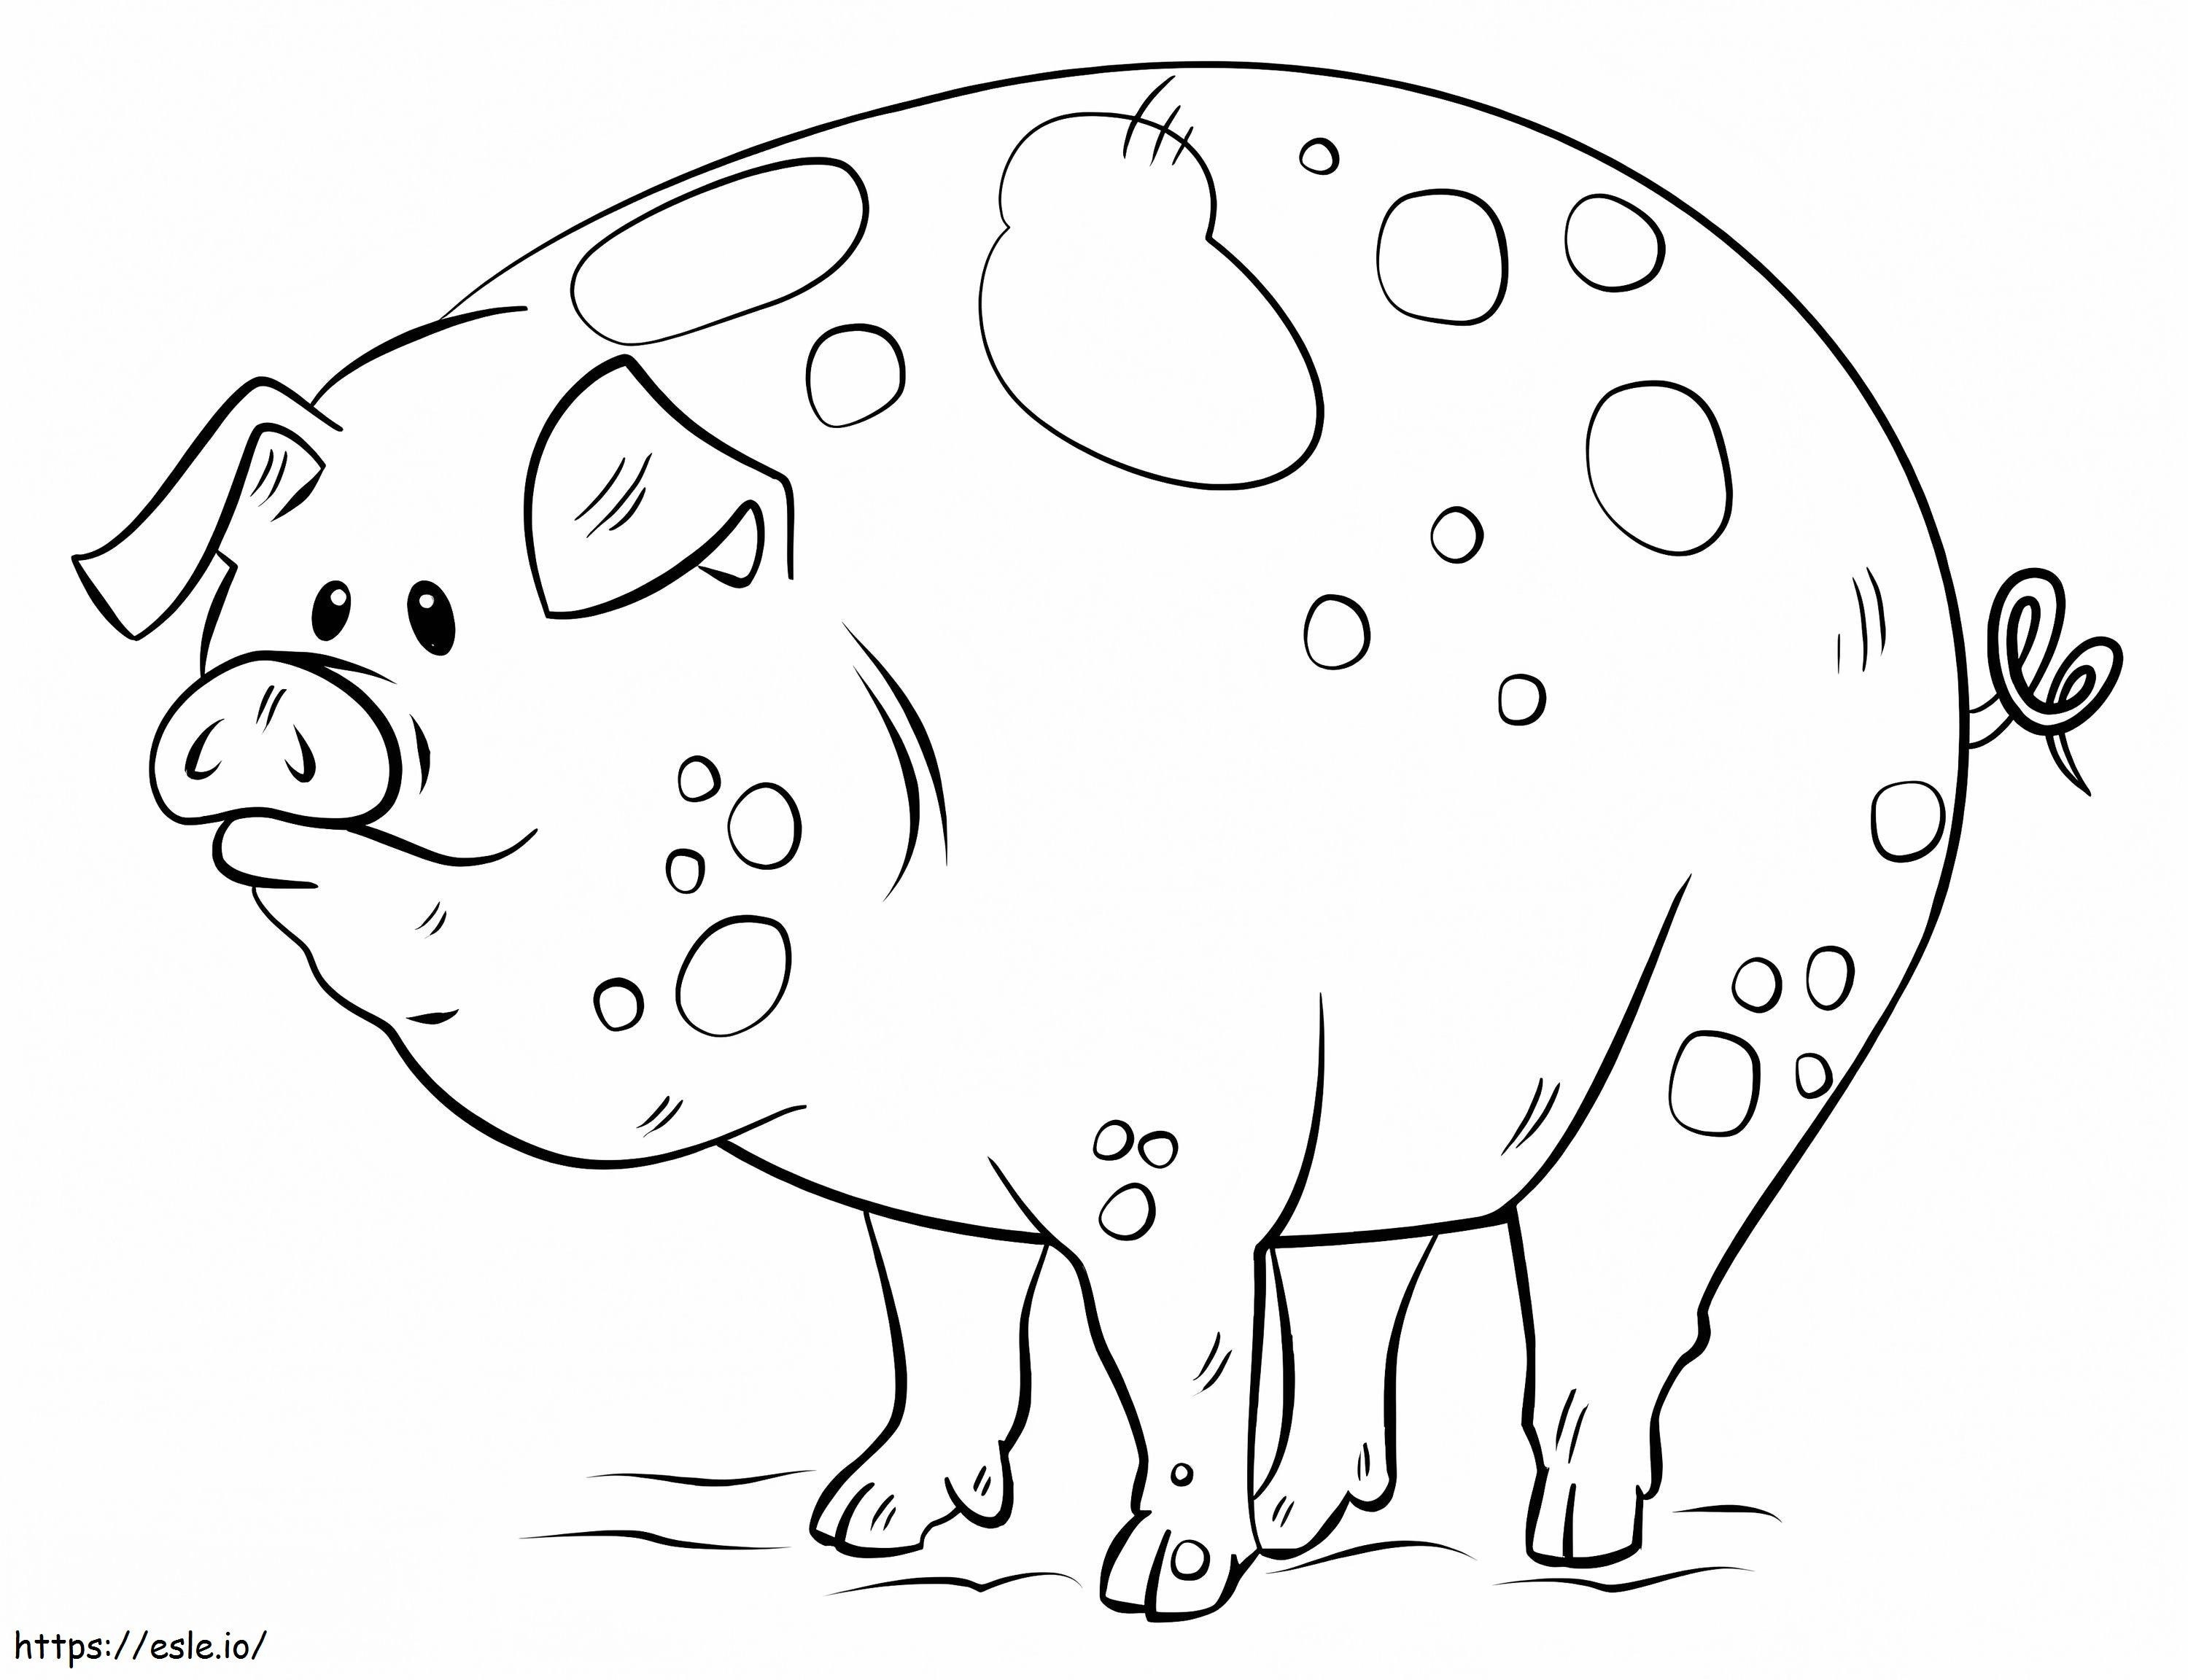 Cartoon Pig coloring page